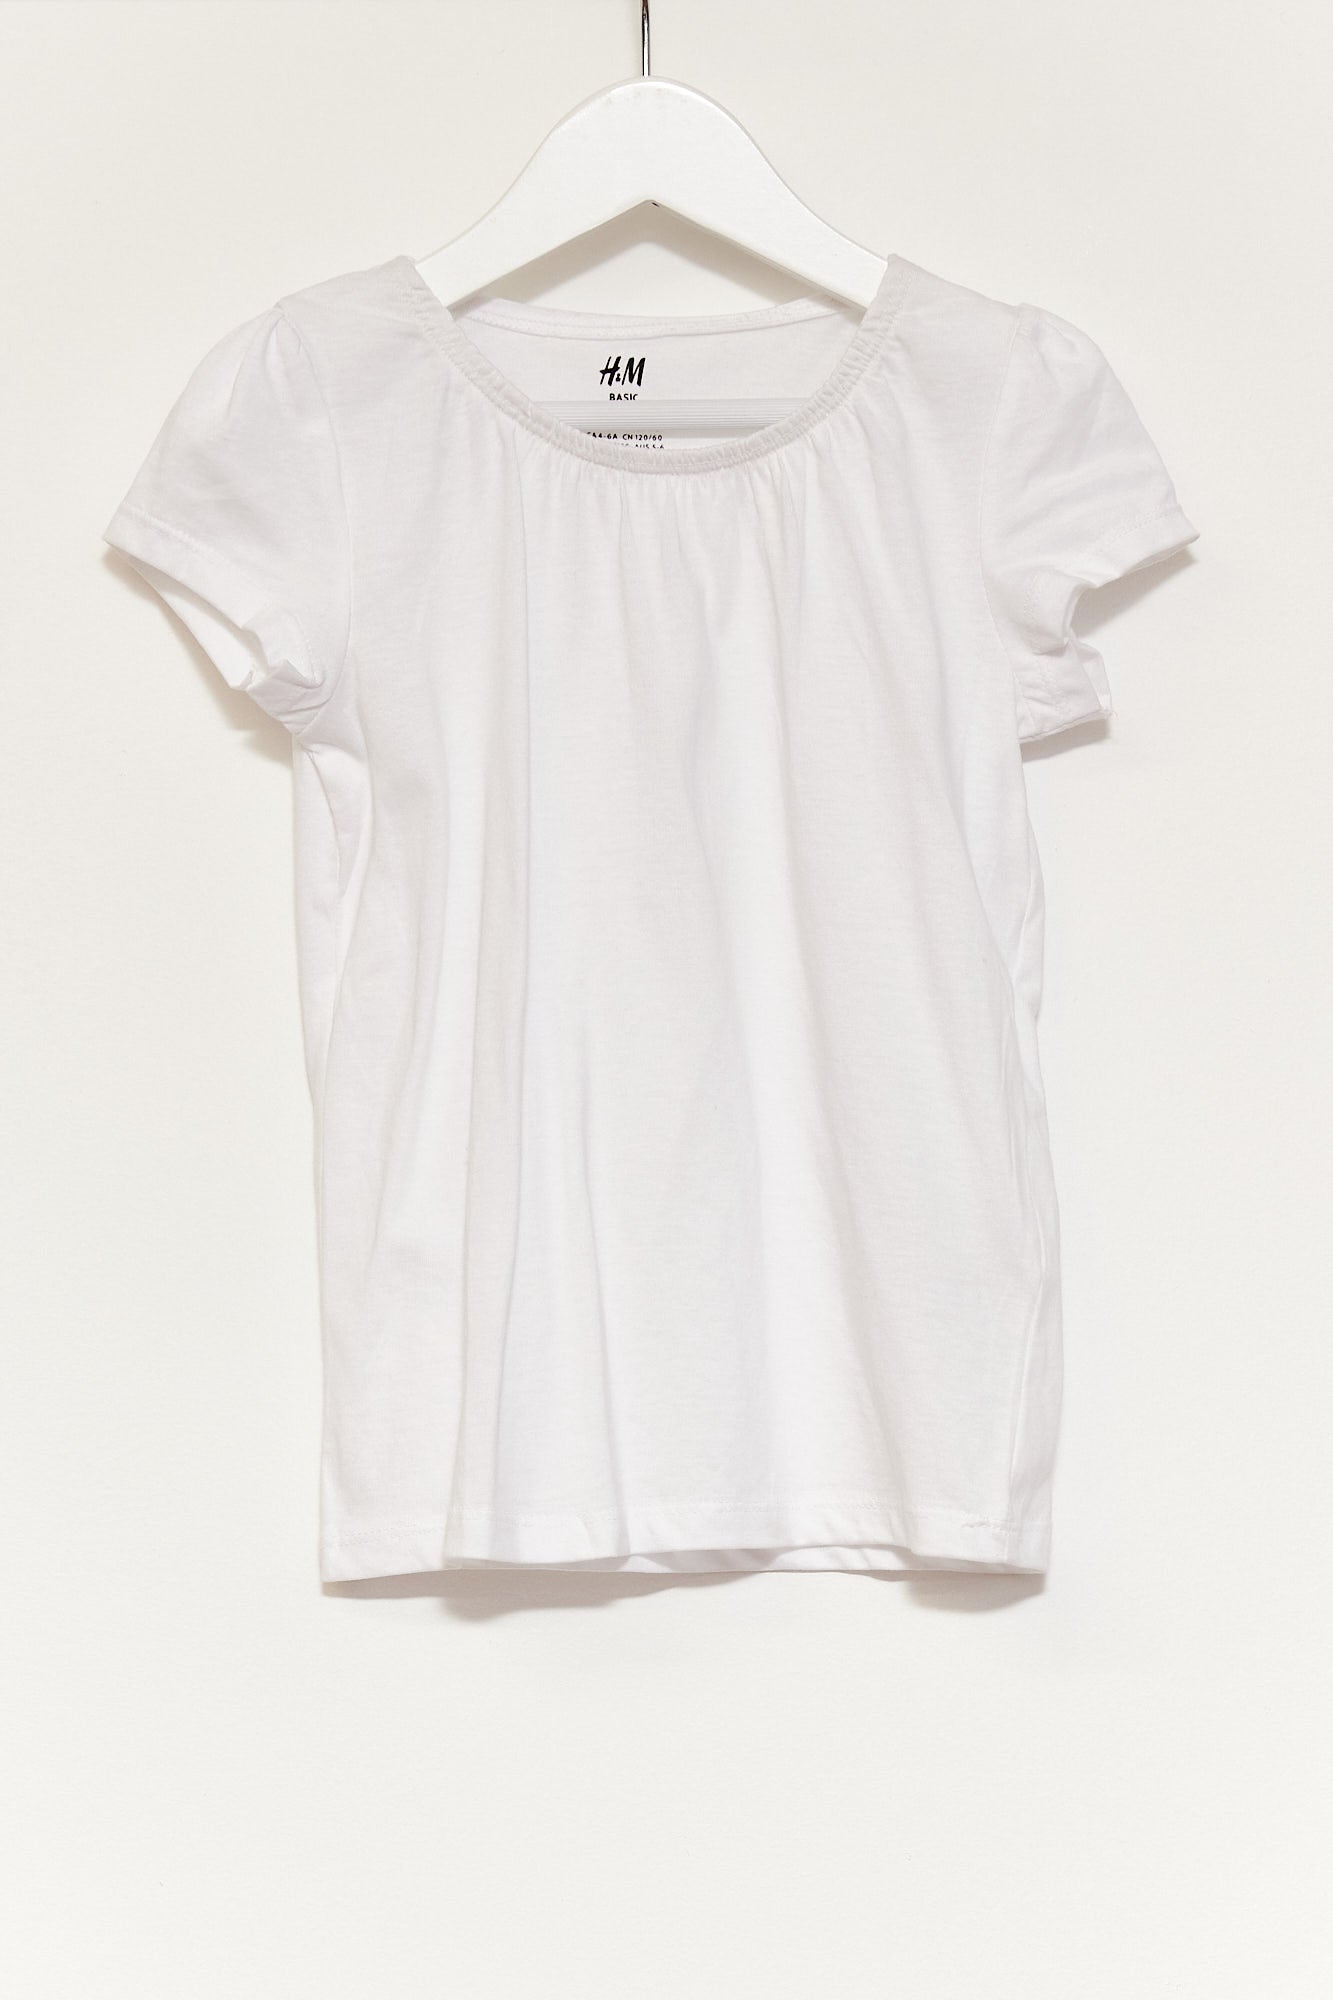 Kids H&M White T-shirt age 6